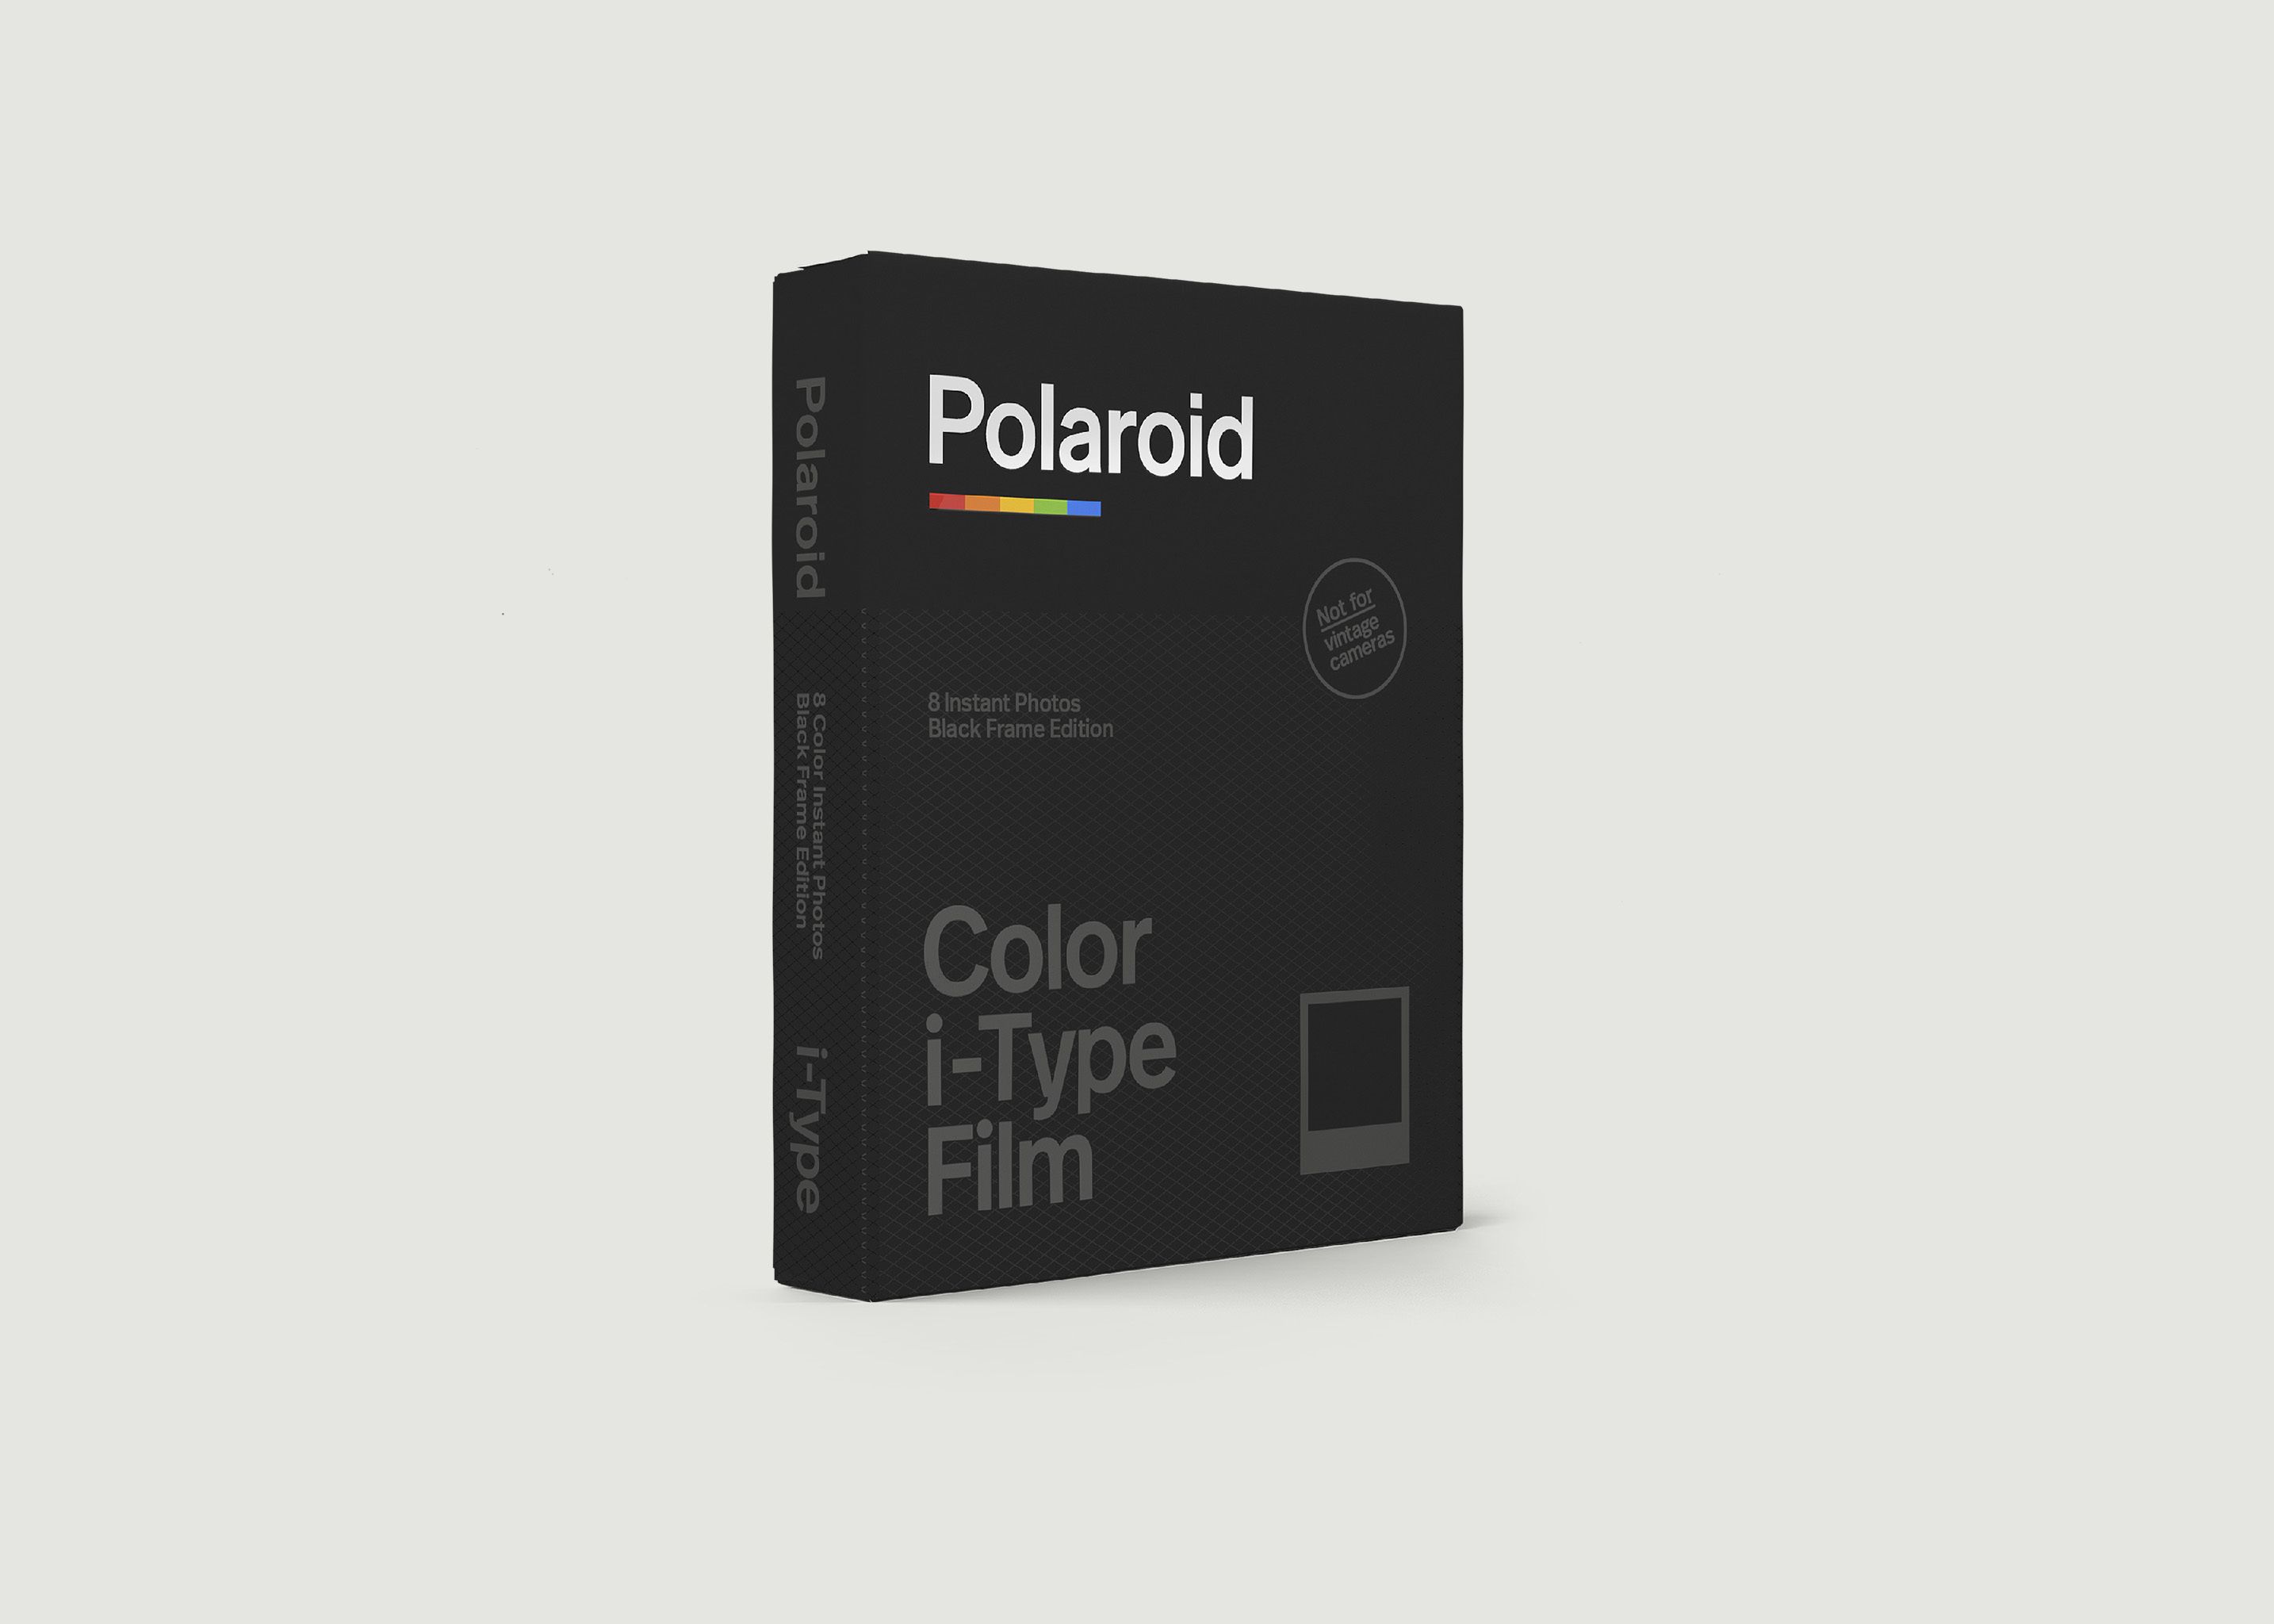 Film Color I Type Black Frame Edition Couleur - Polaroid Originals